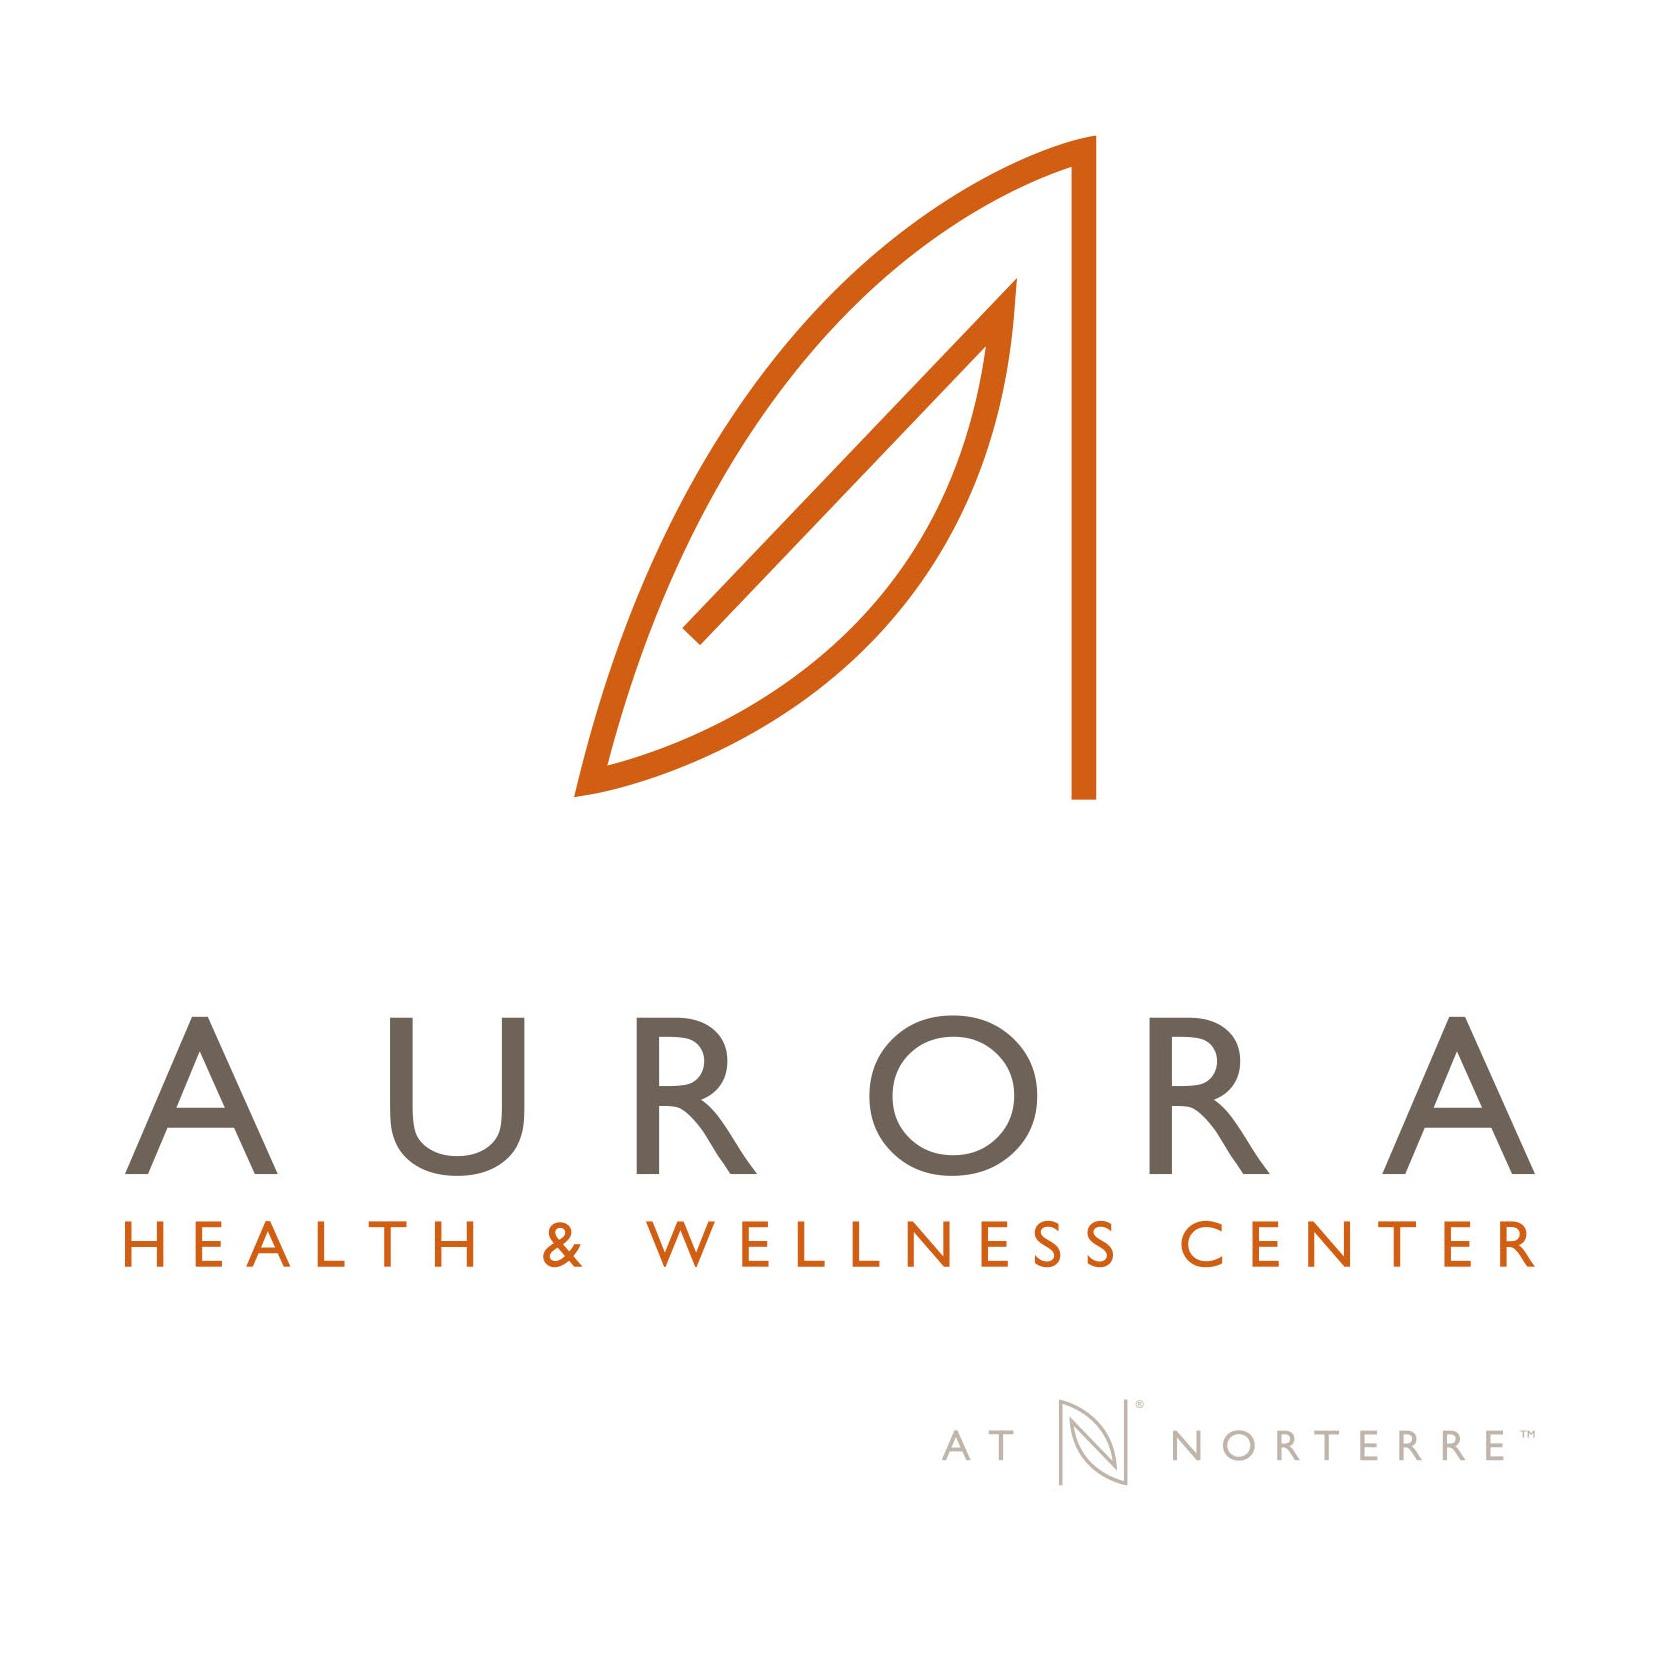 The Aurora Health & Wellness Center Photo